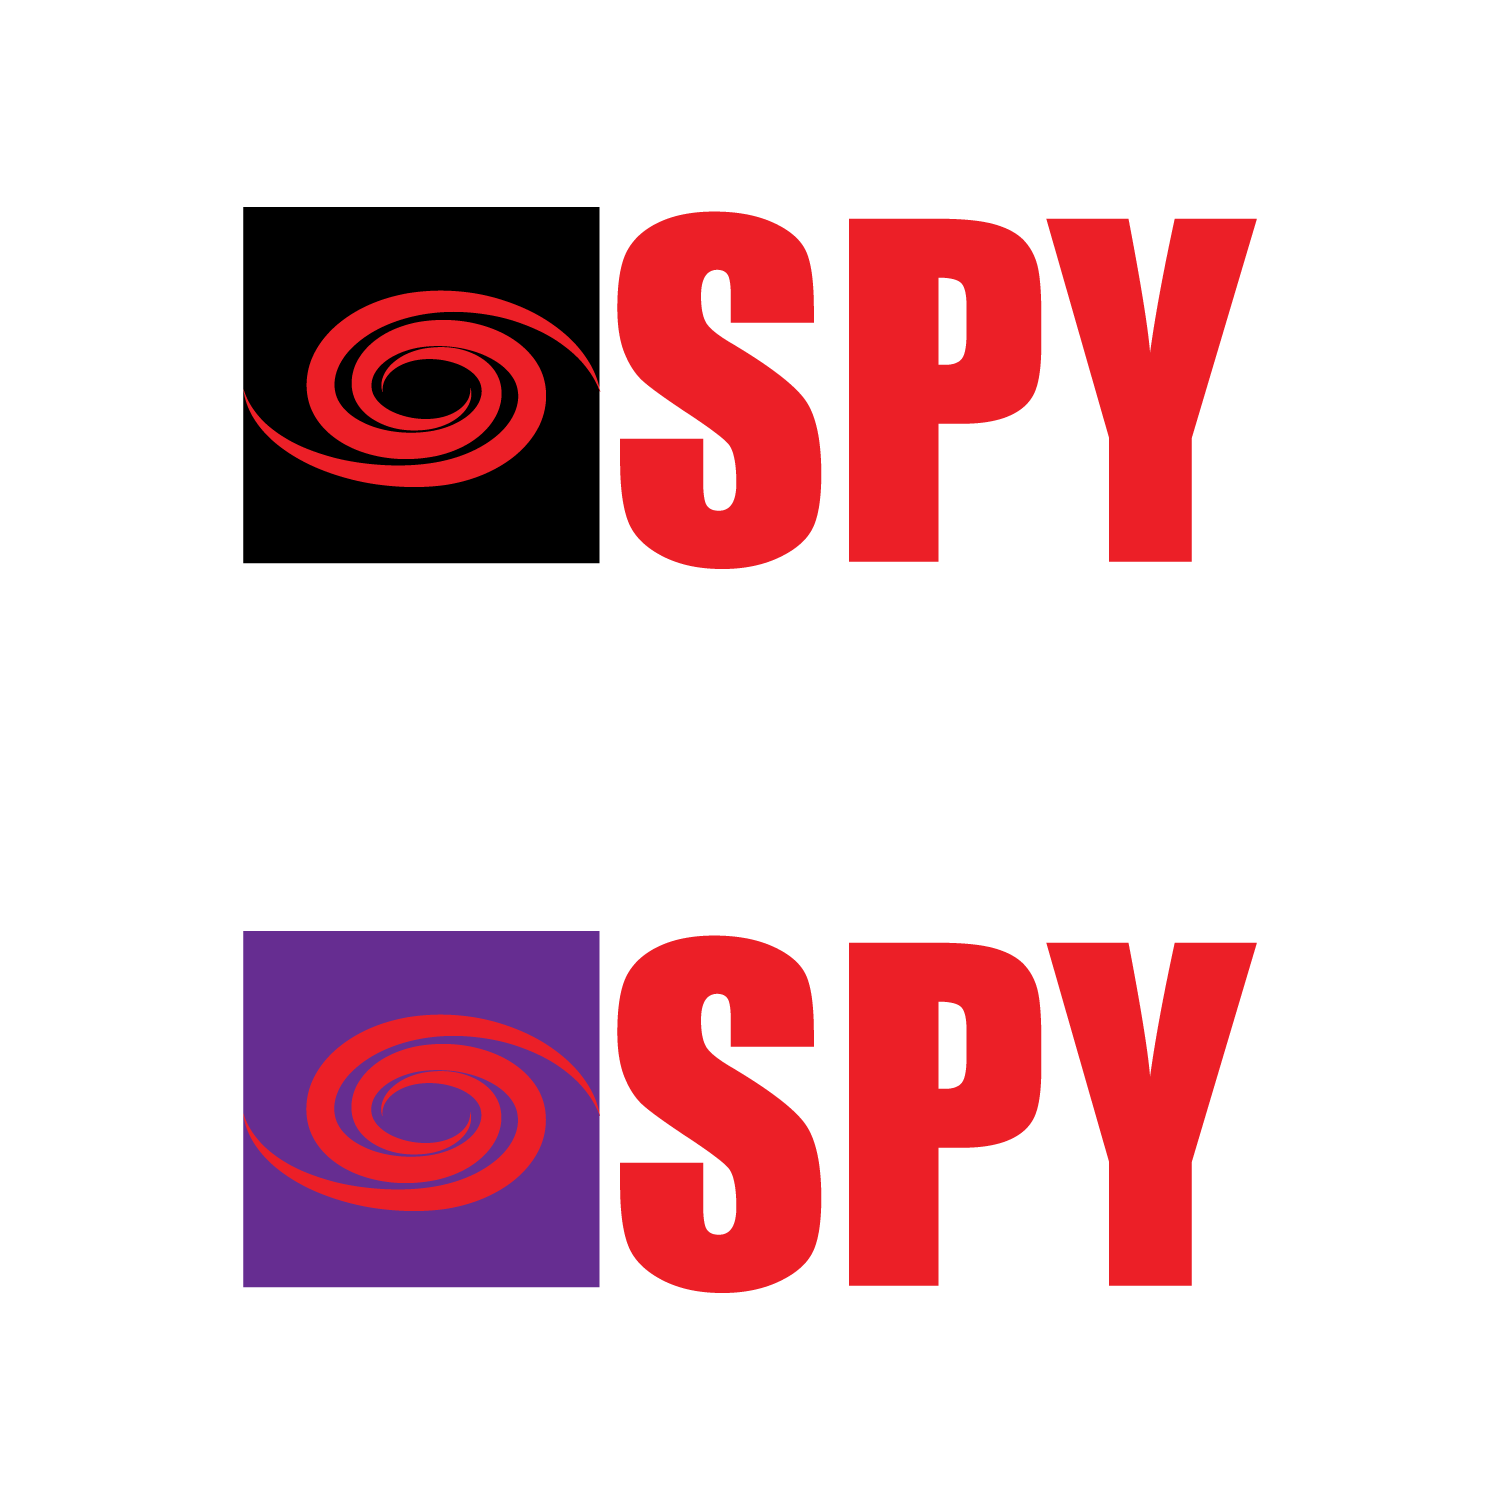 I Spy Logo - Elegant, Playful, Entertainment Industry Logo Design for The text